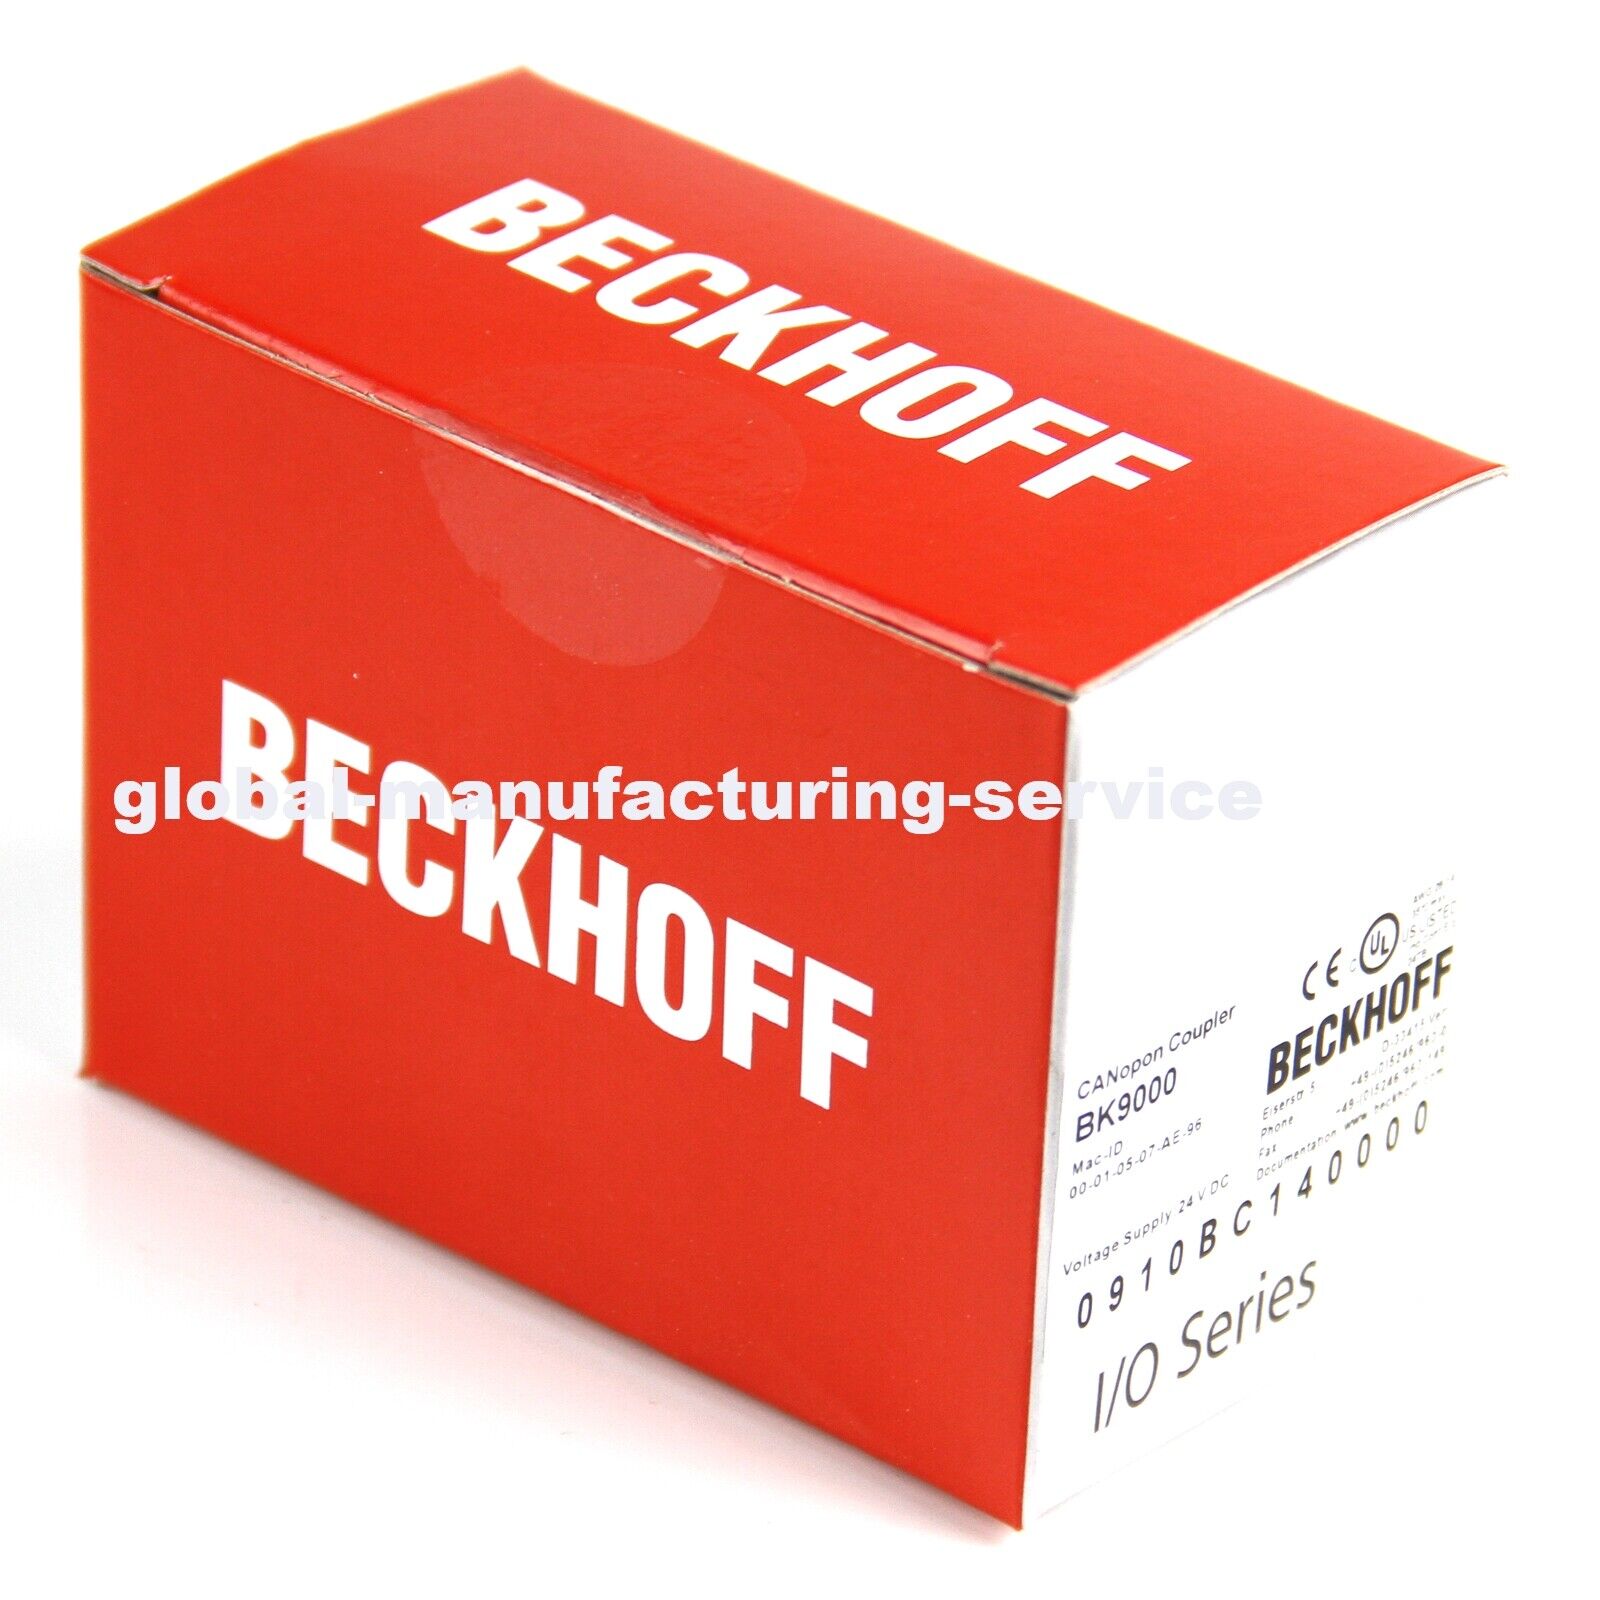 new BECKHOFF BK9000 Digital Module PLC